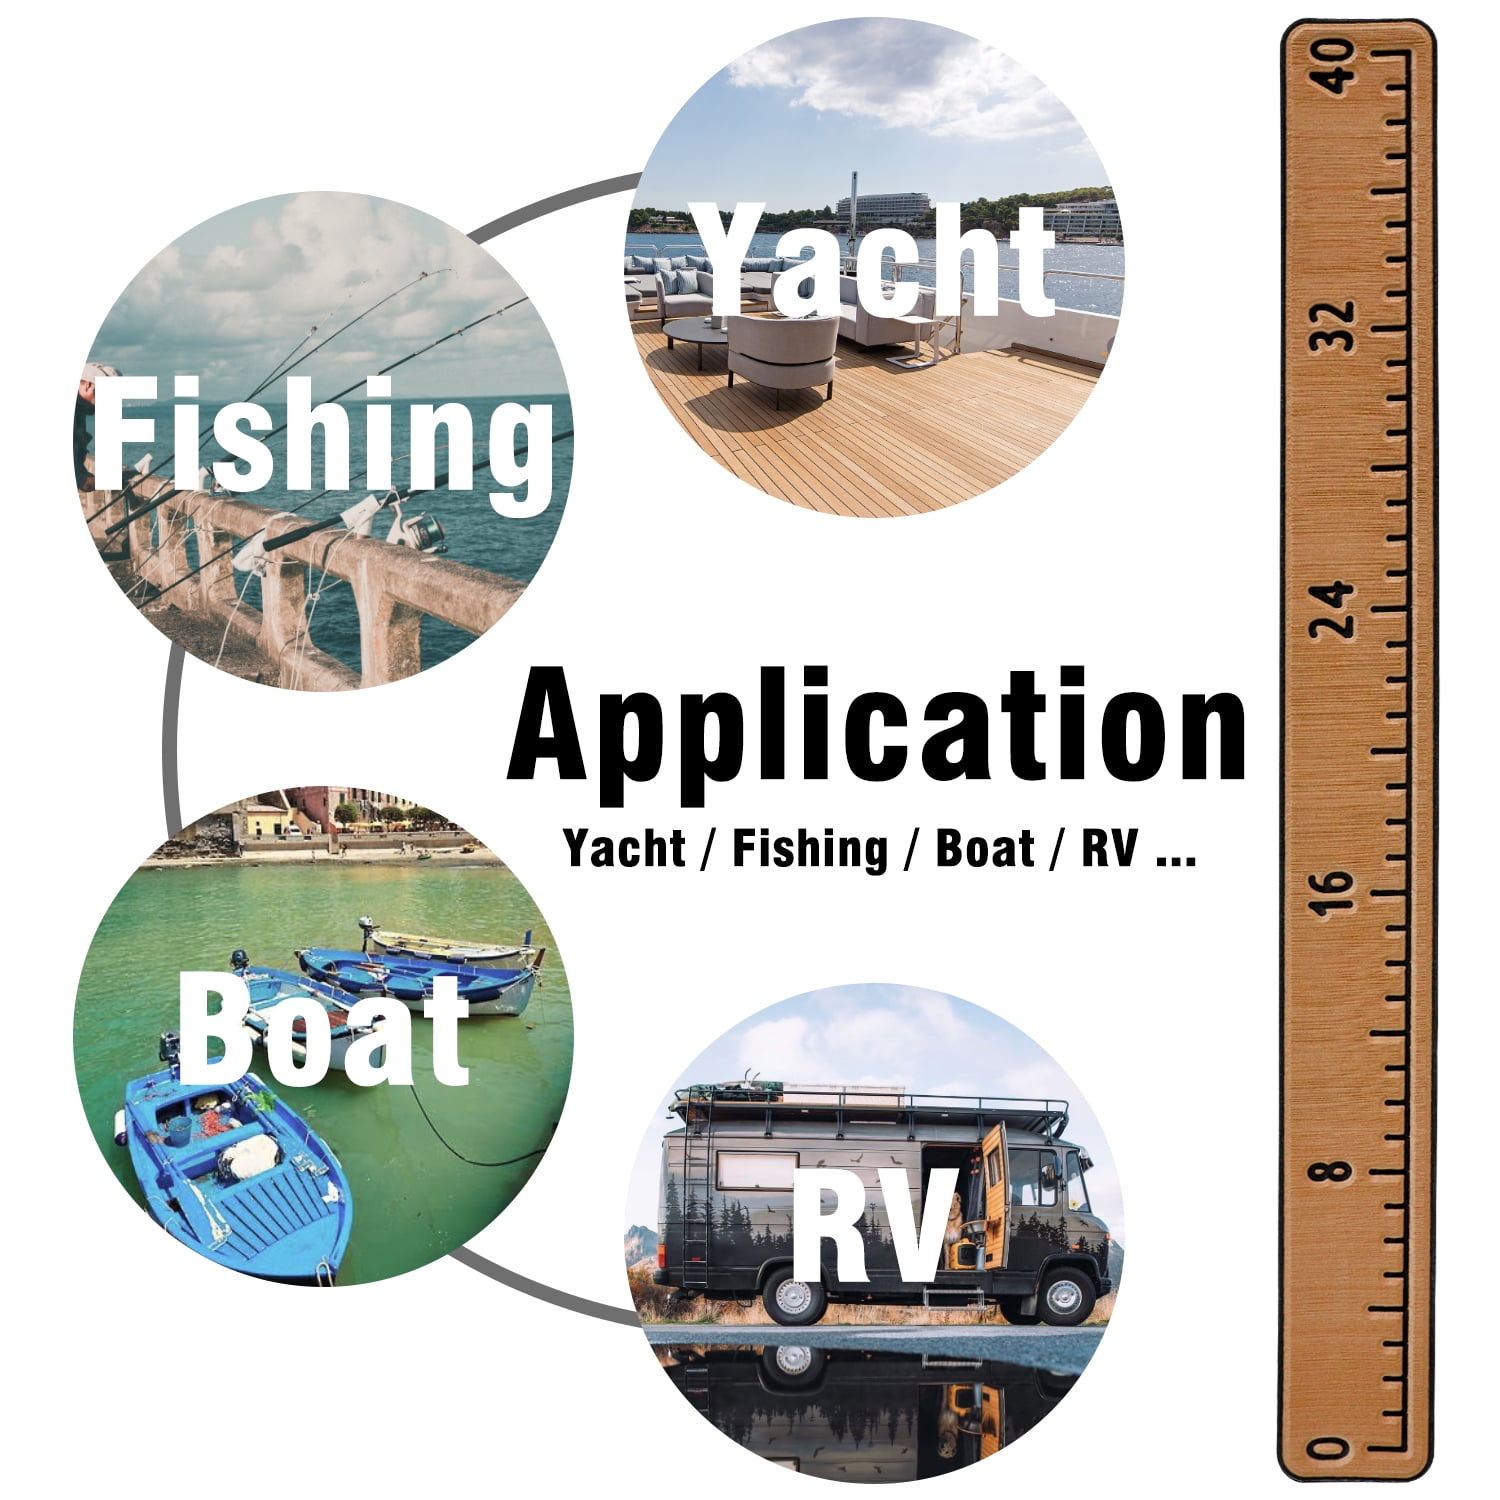 VAXATO Adhesive Fish Ruler - 40 inch Fishing Measuring Tape - Fish Measuring Tape for Fishing Boat, Kayak, Cooler, Workbench - Waterproof Fish